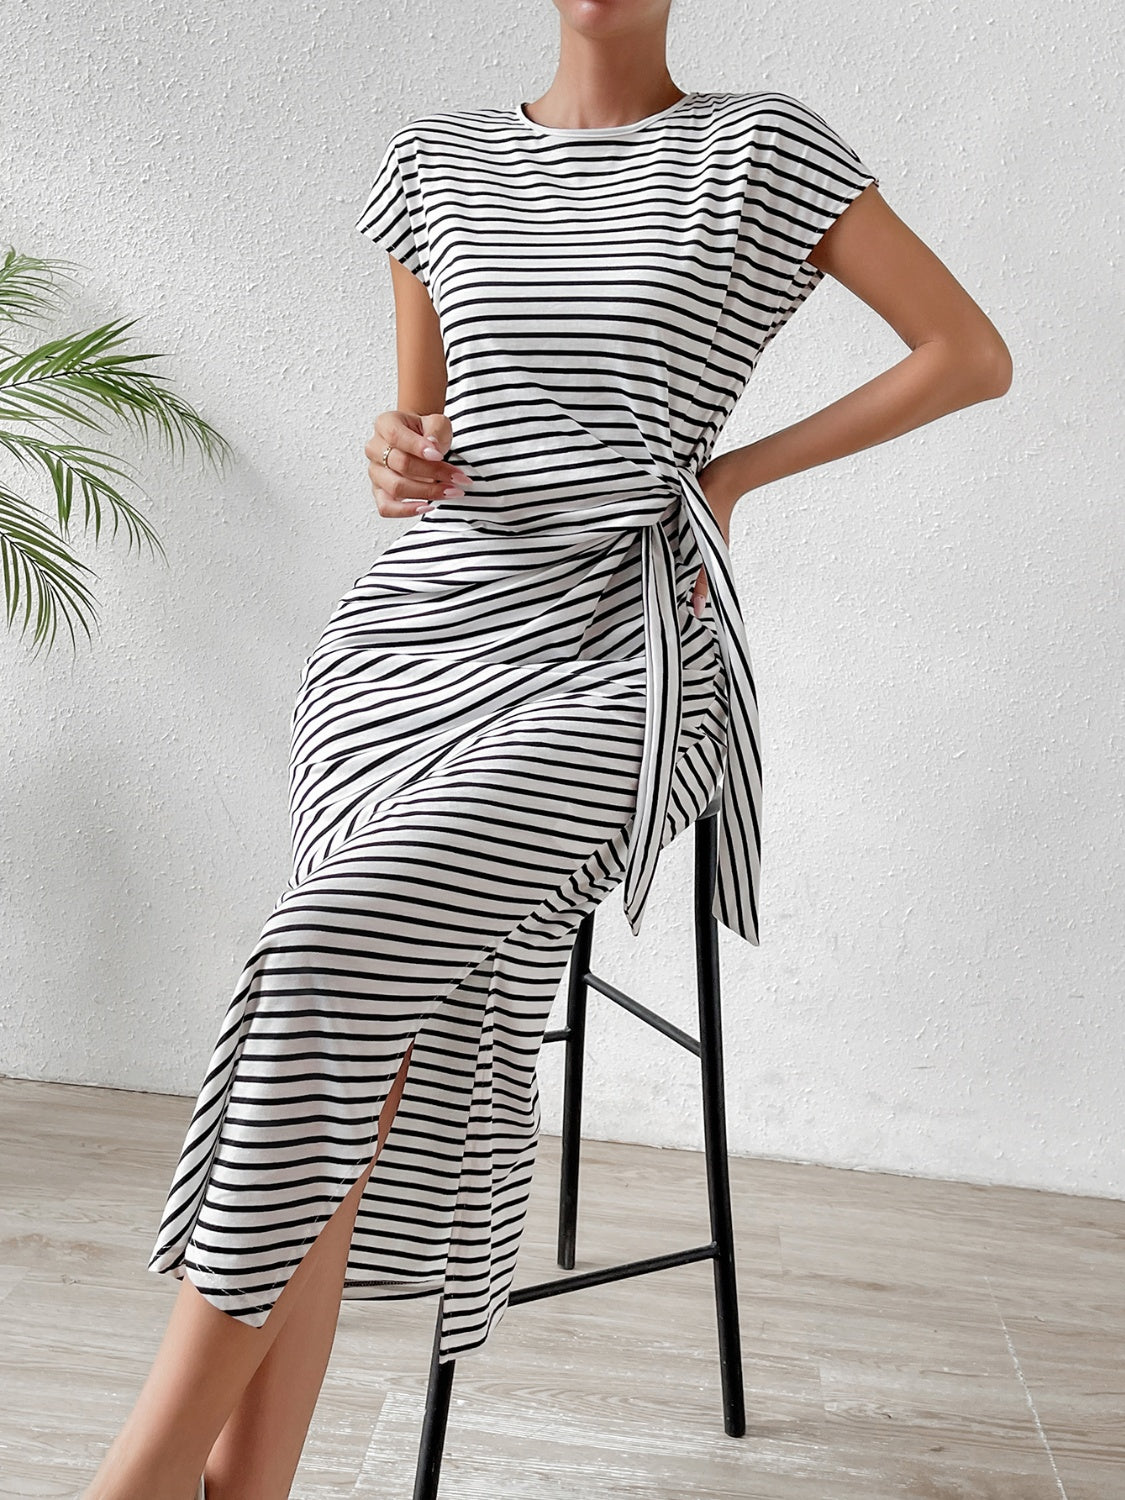 TEEK - Tied Striped Round Neck Short Sleeve Tee Dress DRESS TEEK Trend   